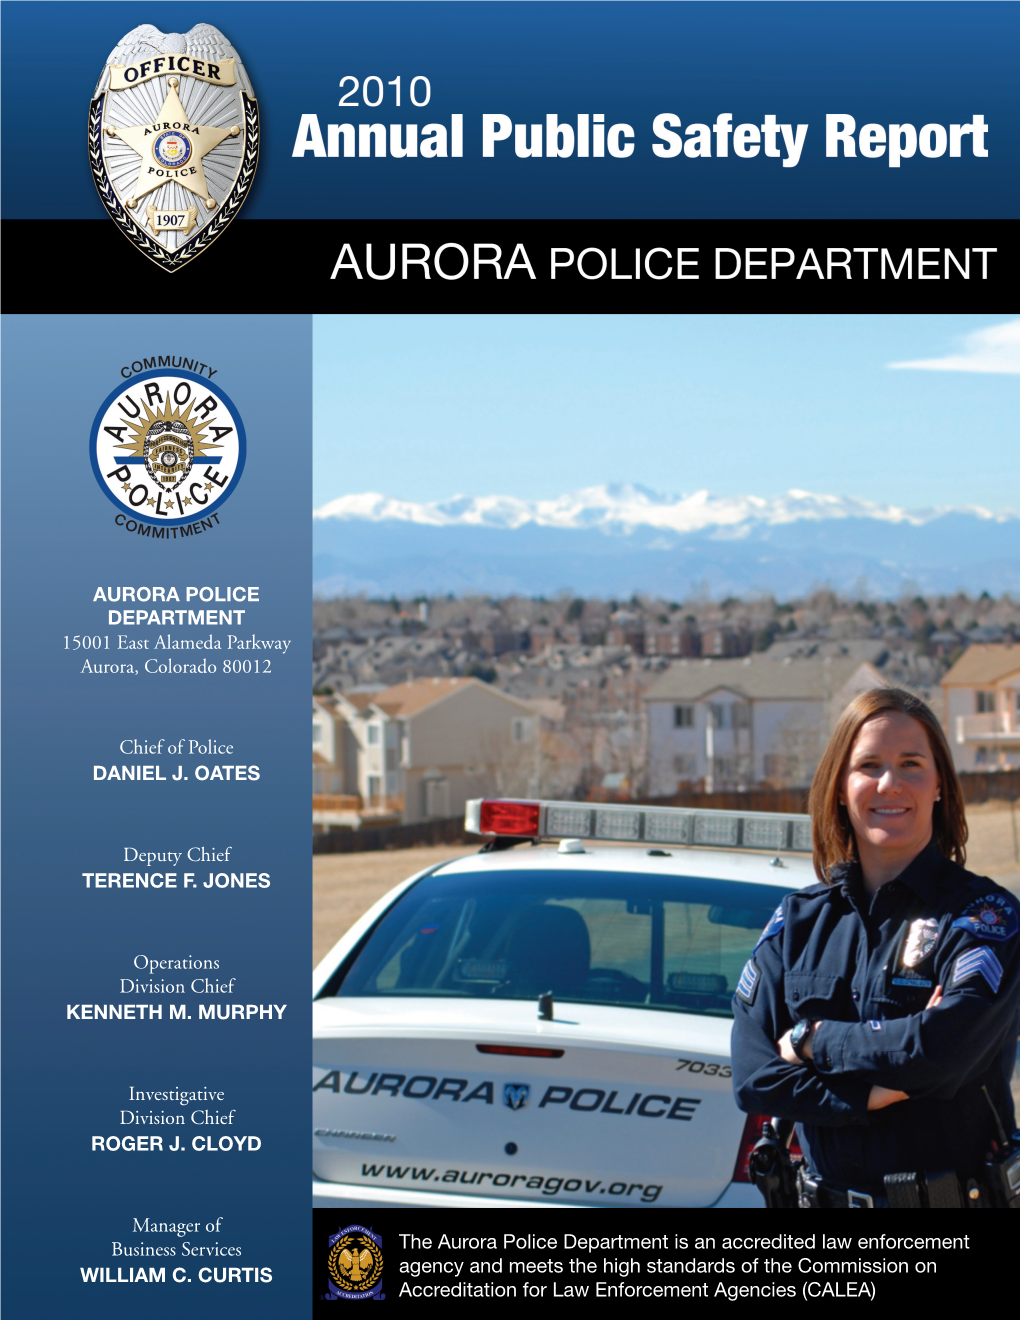 AURORA POLICE DEPARTMENT 15001 East Alameda Parkway Aurora, Colorado 80012